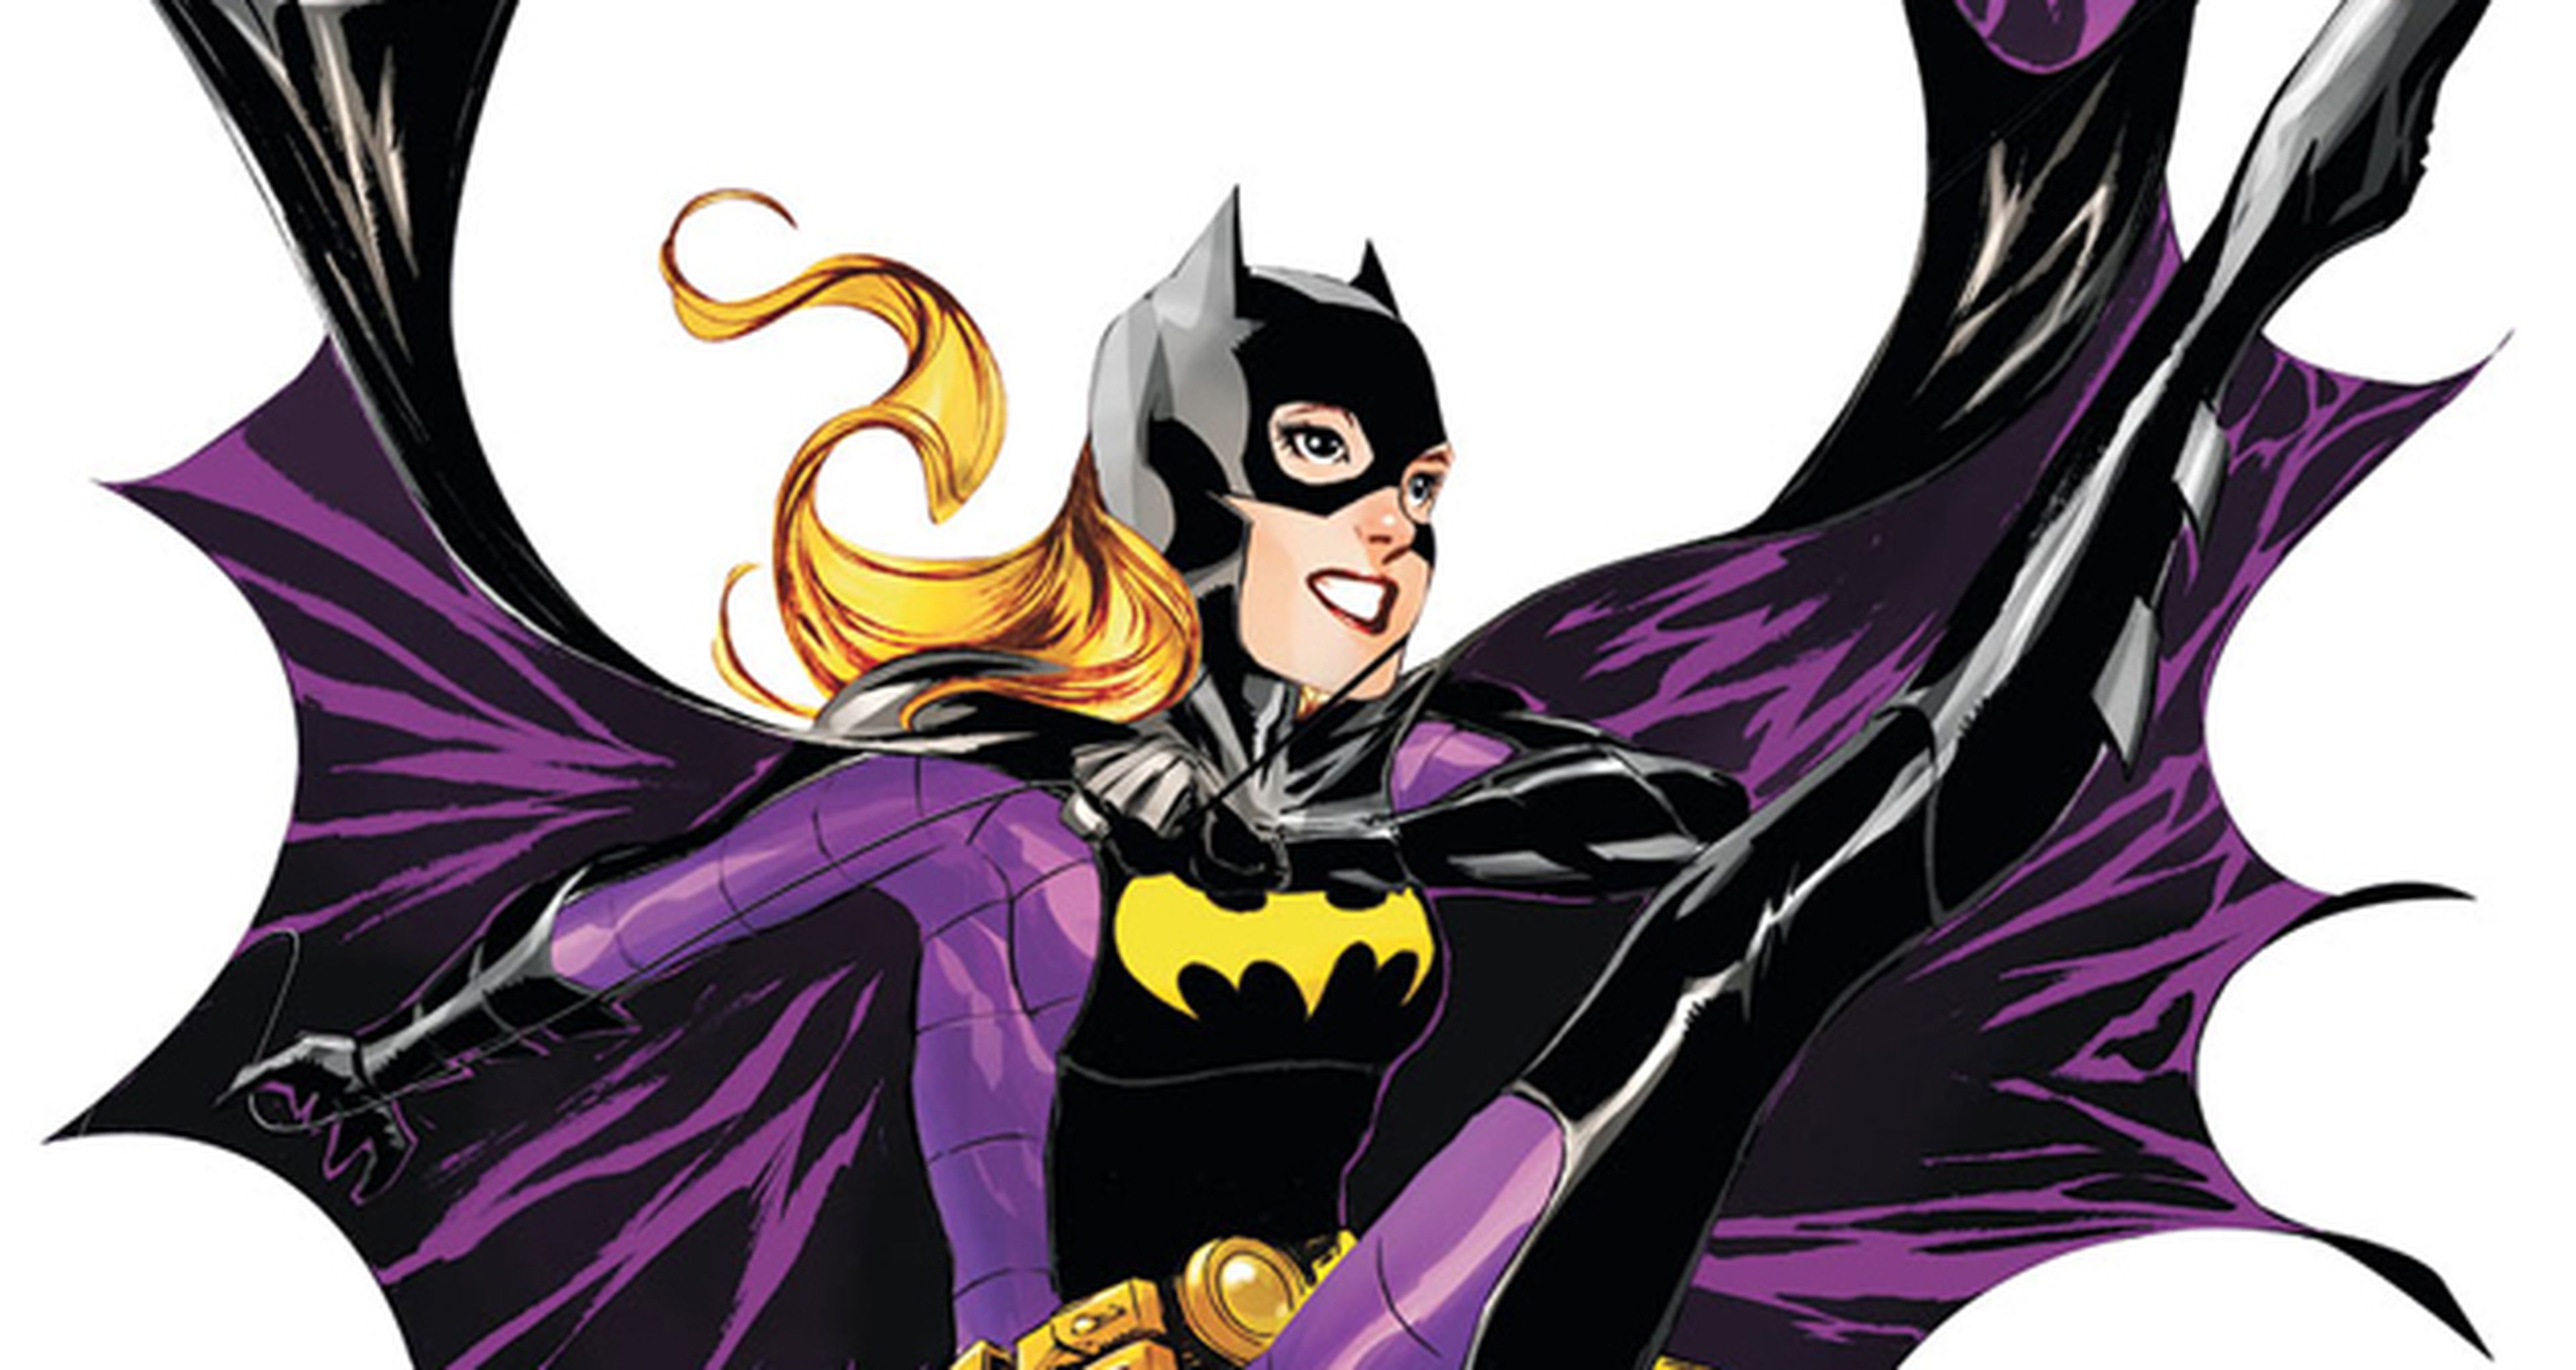 EEUU: Gail Simone seguirá frente a Batgirl